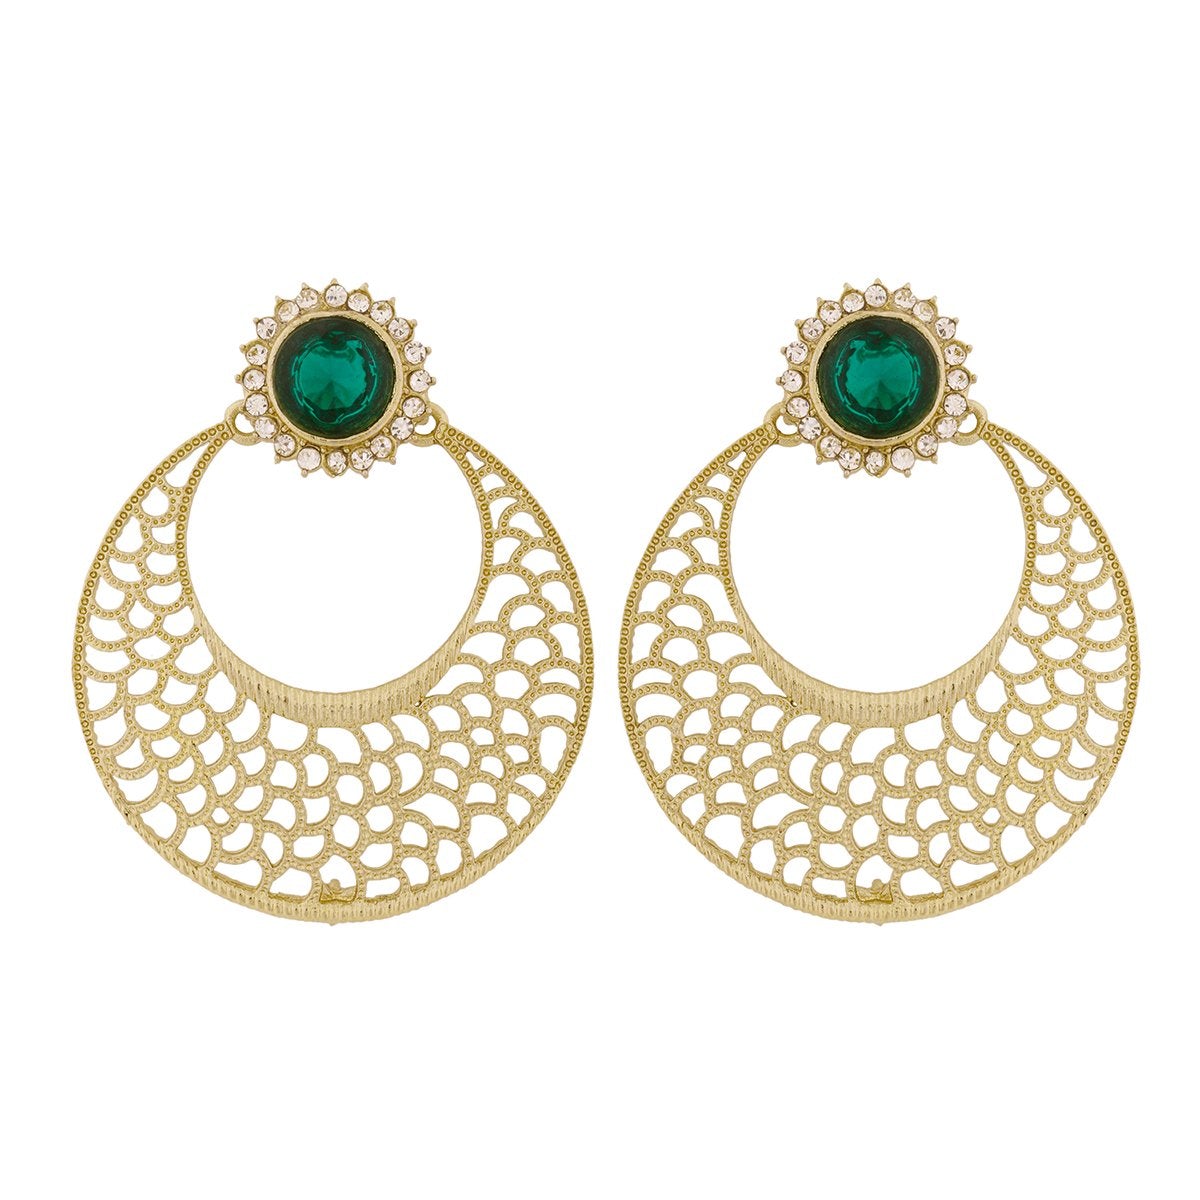 Chaand Bali Filigree Antique Rhodium Plated Green Earring For Women